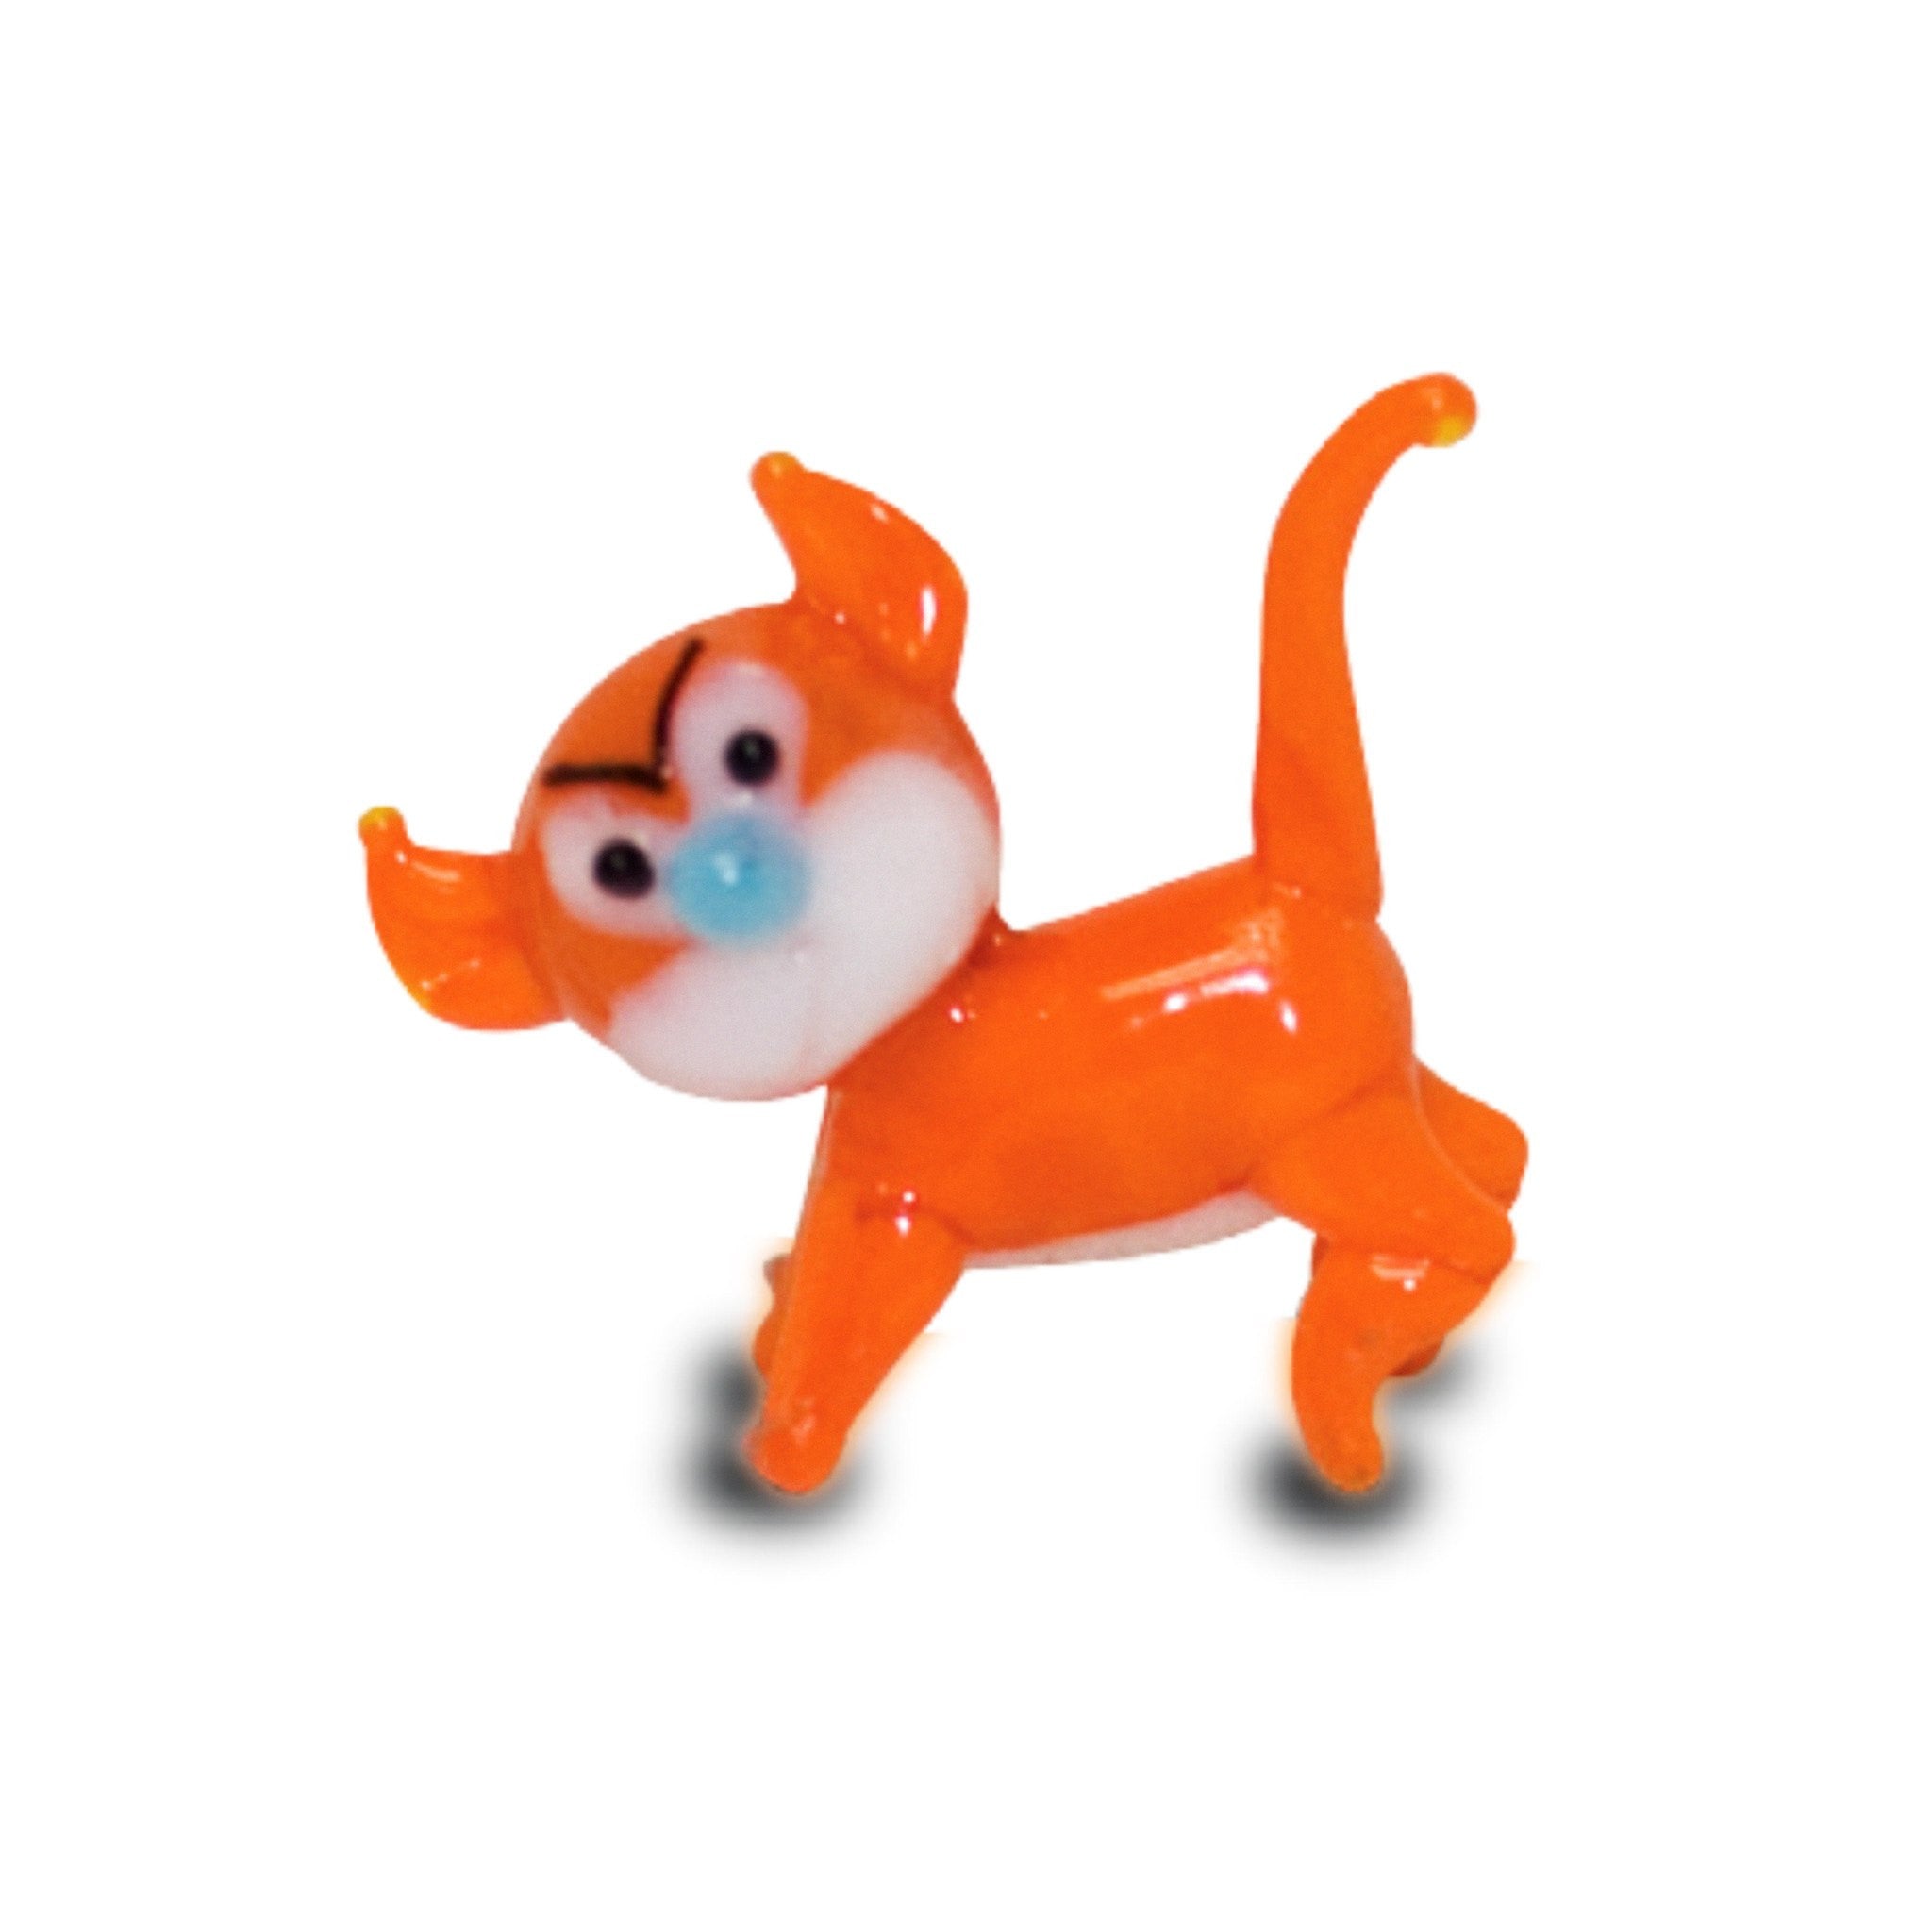 Smurf Cat Figure Handmade 